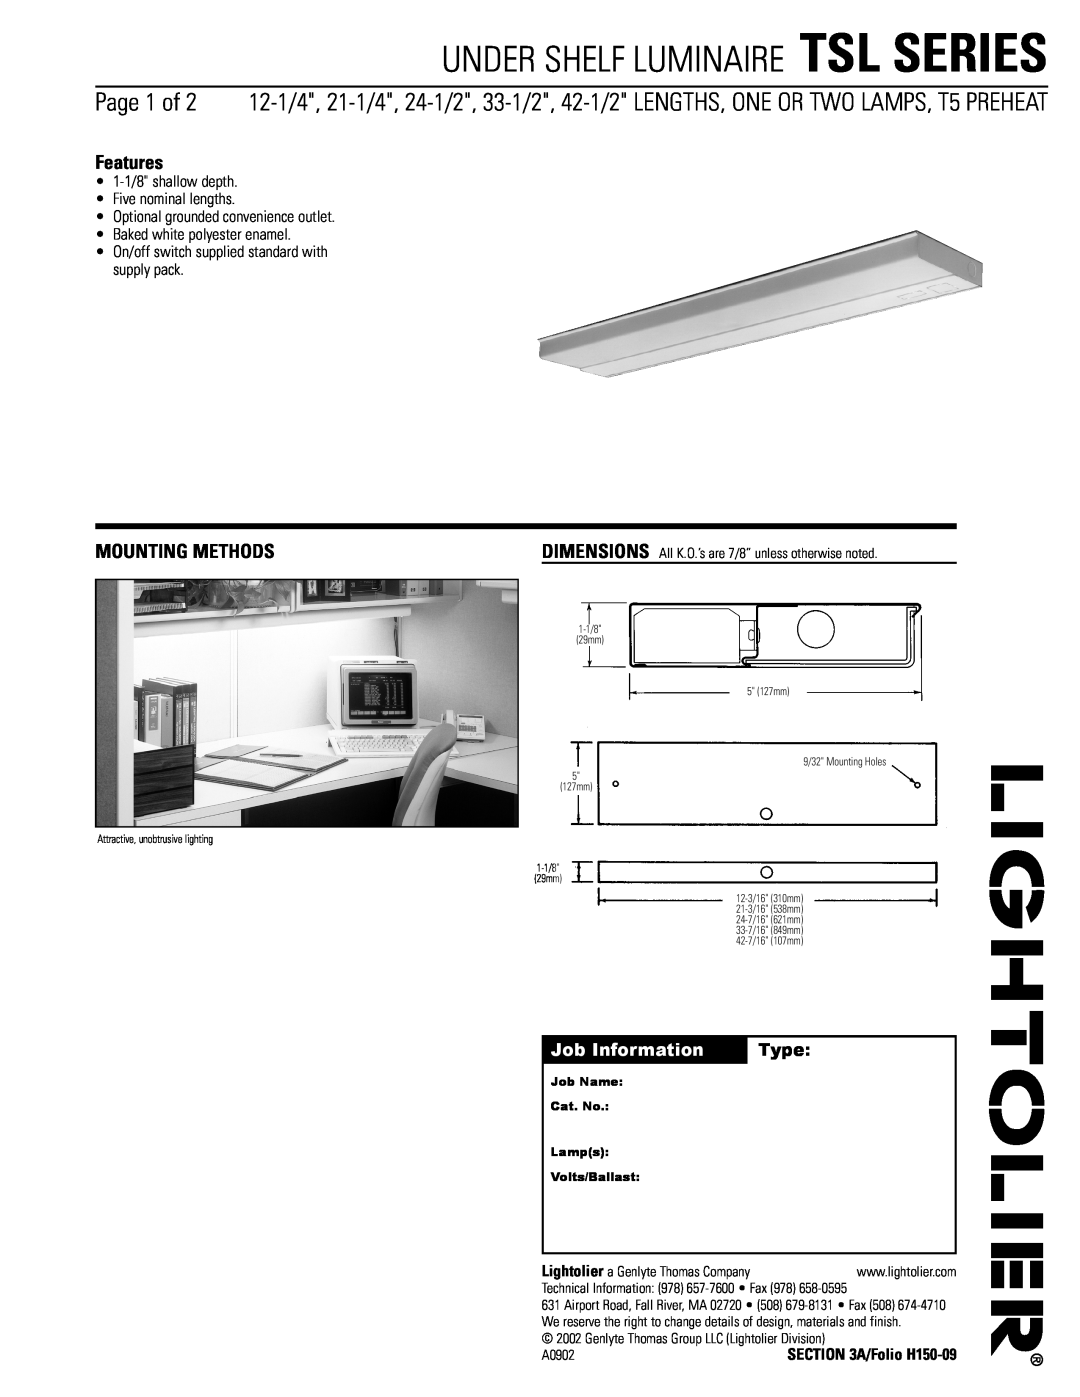 Lightolier TSL dimensions Under Shelf Luminaire Tsl Series, Features, Mounting Methods, Job Information, Type 